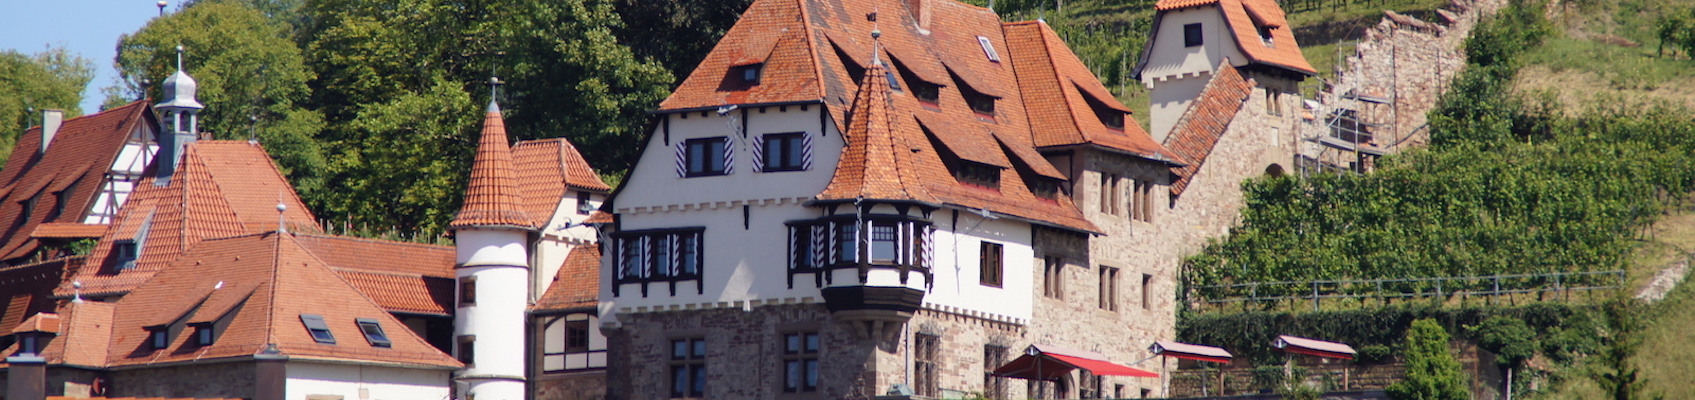 Schloss Beilstein